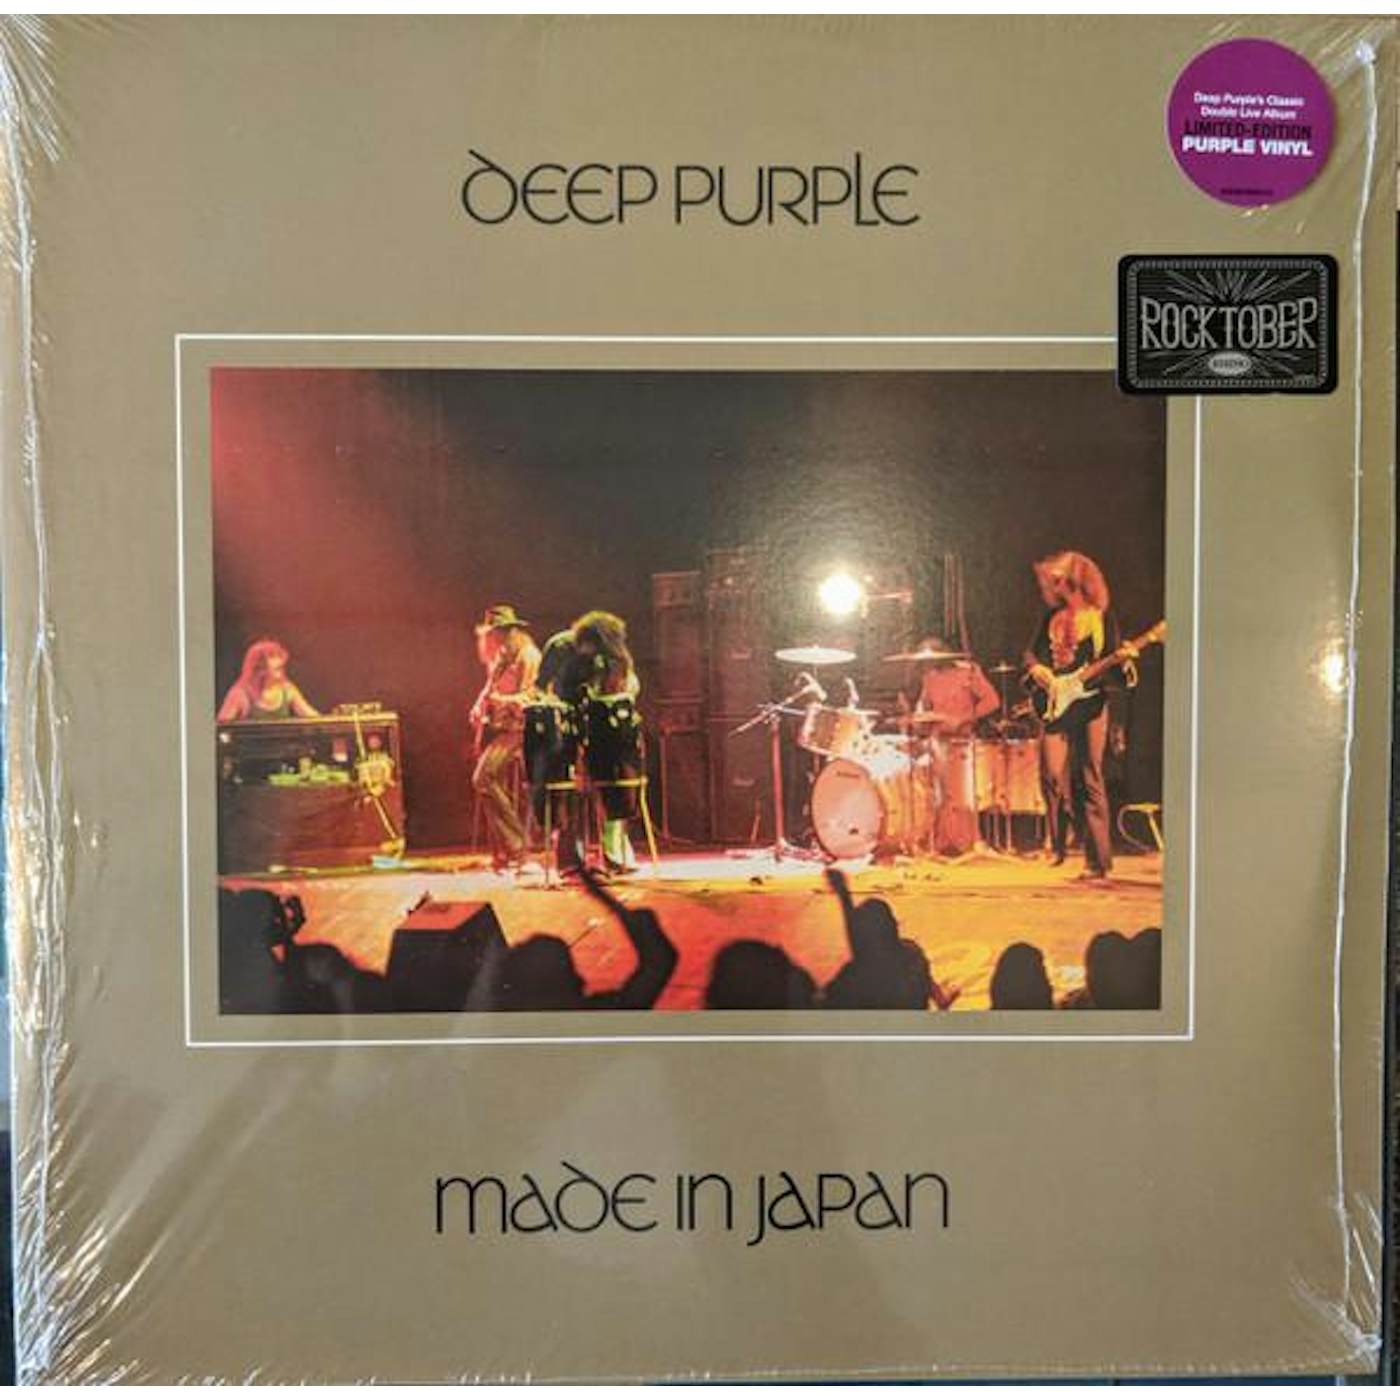 Deep Purple MADE IN JAPAN (2LP/PURPLE VINYL) (ROCKTOBER) Vinyl Record